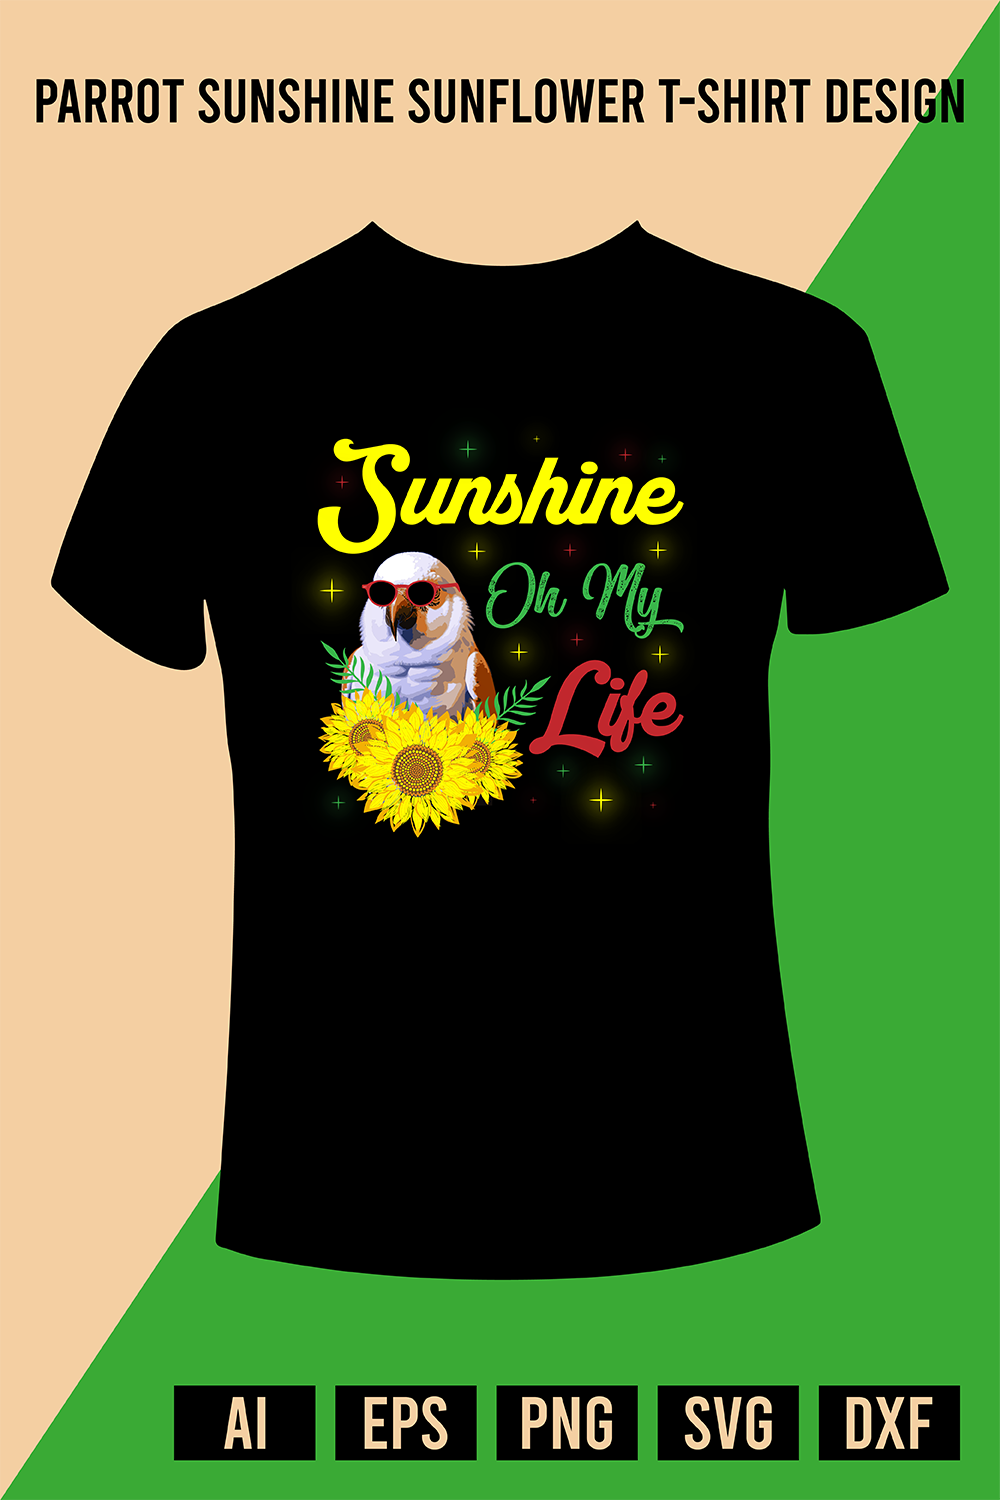 Parrot Sunshine Sunflower T-Shirt Design pinterest preview image.